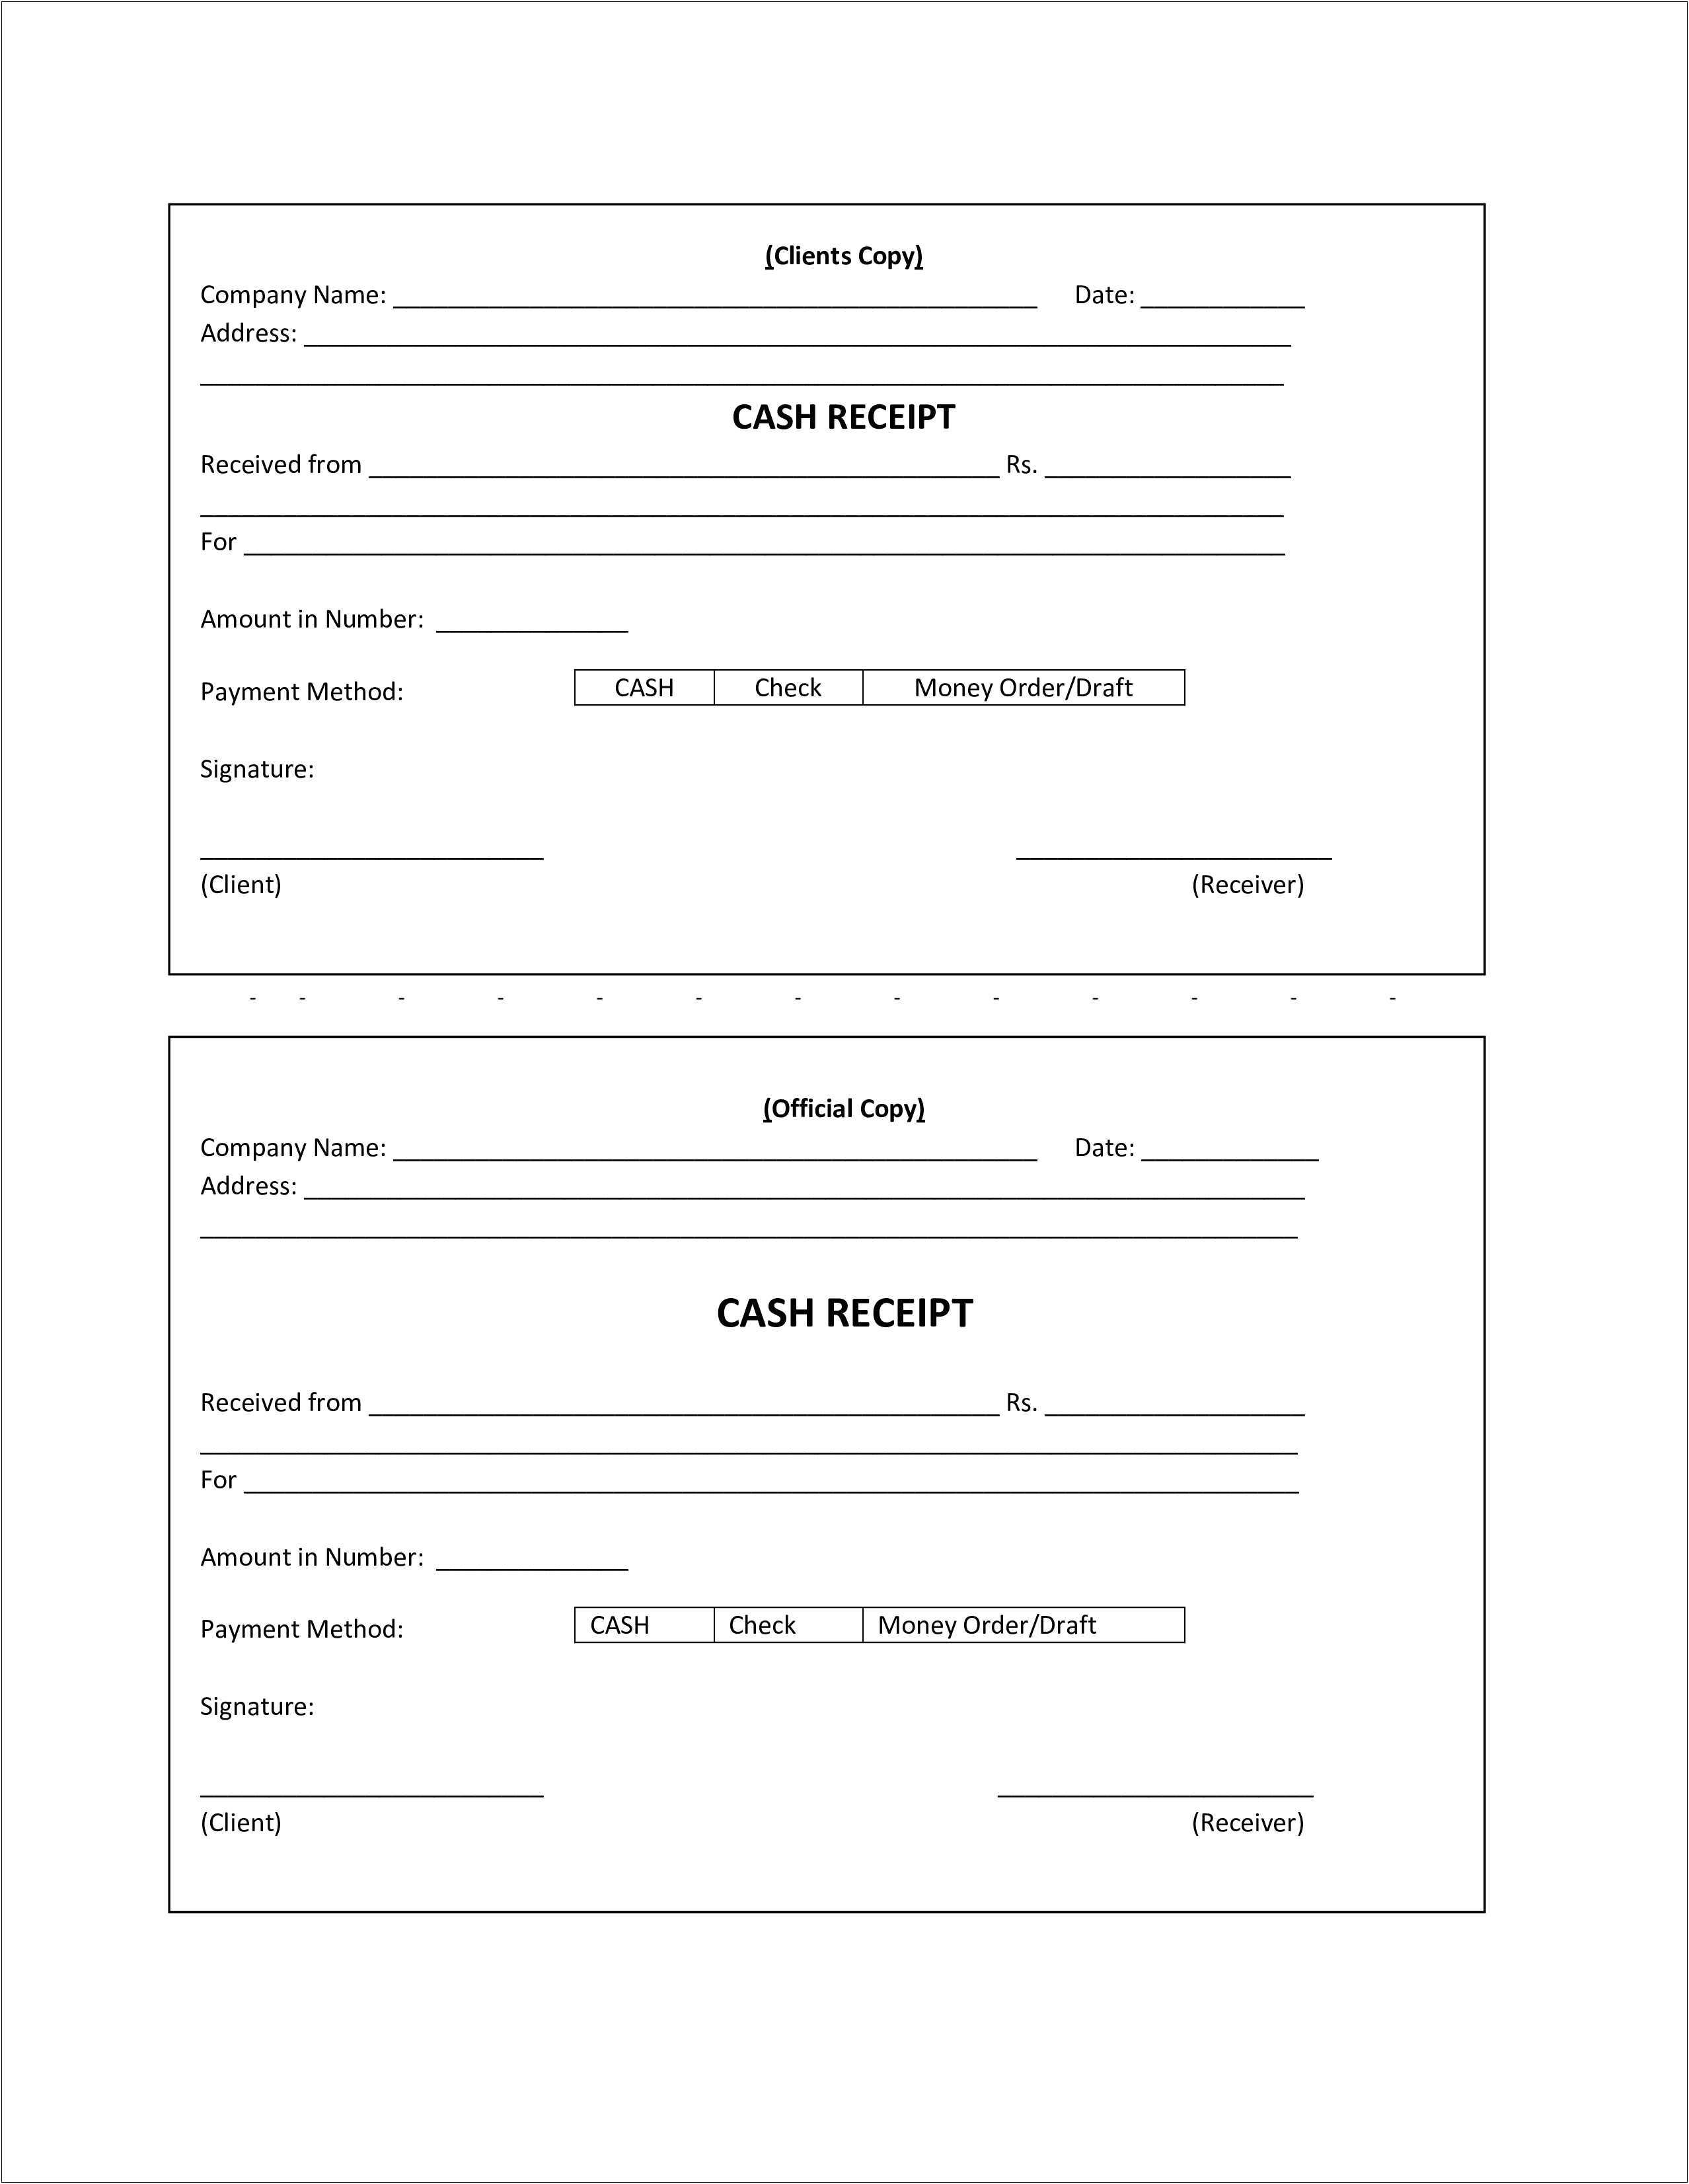 free-printable-cash-receipt-template-uk-resume-example-gallery